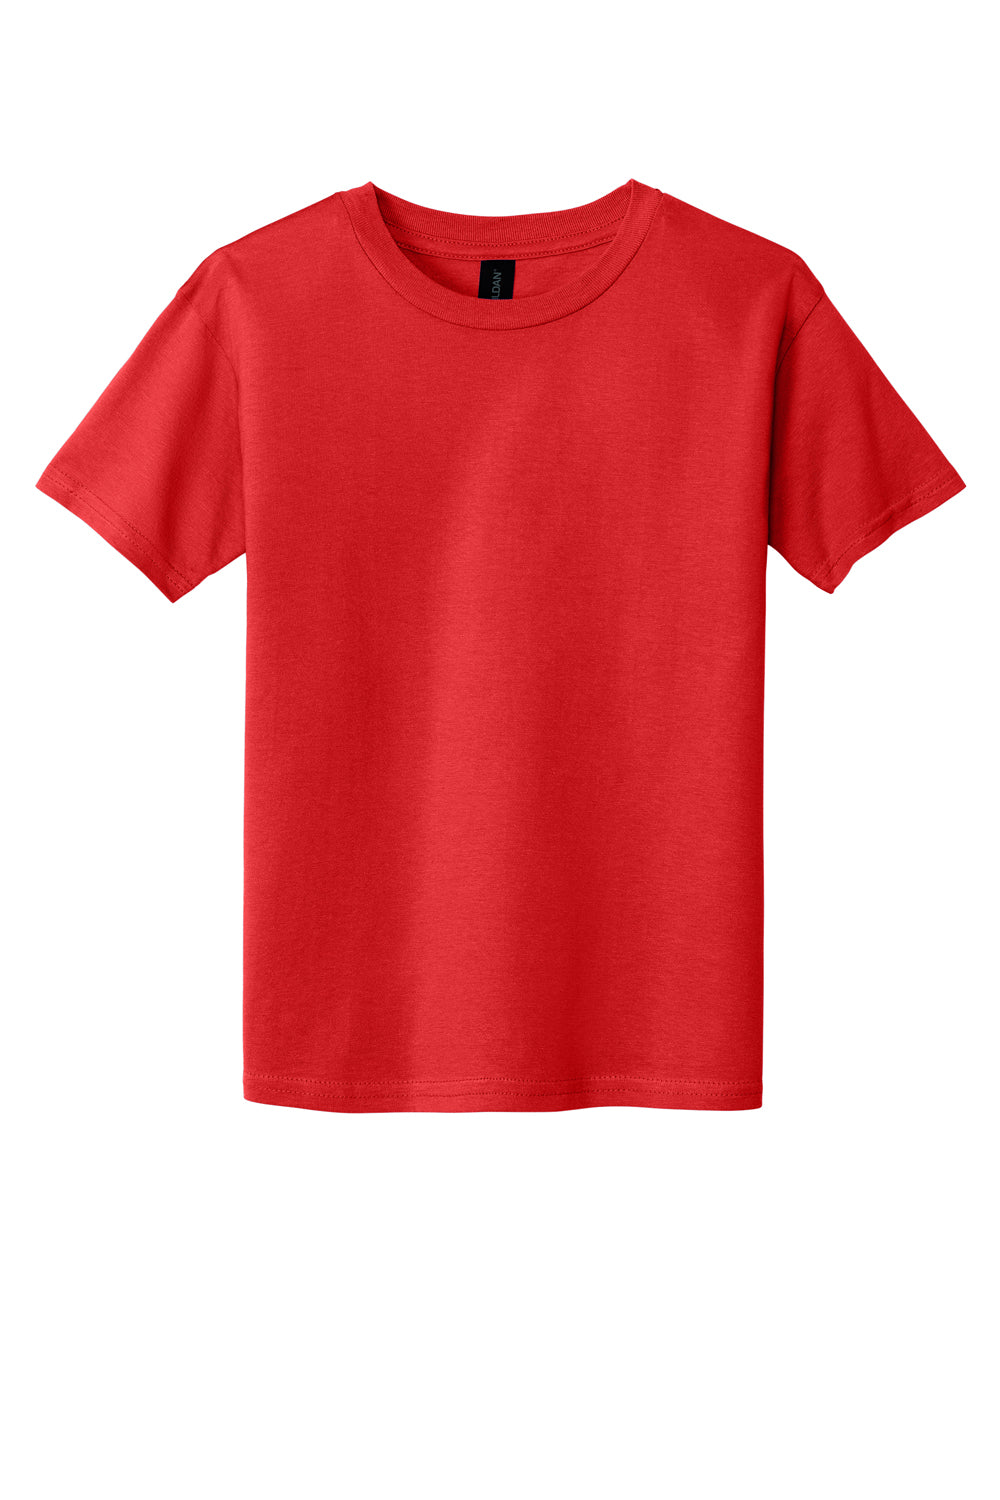 Gildan Youth Softstyle Short Sleeve Crewneck T-Shirt Red Flat Front